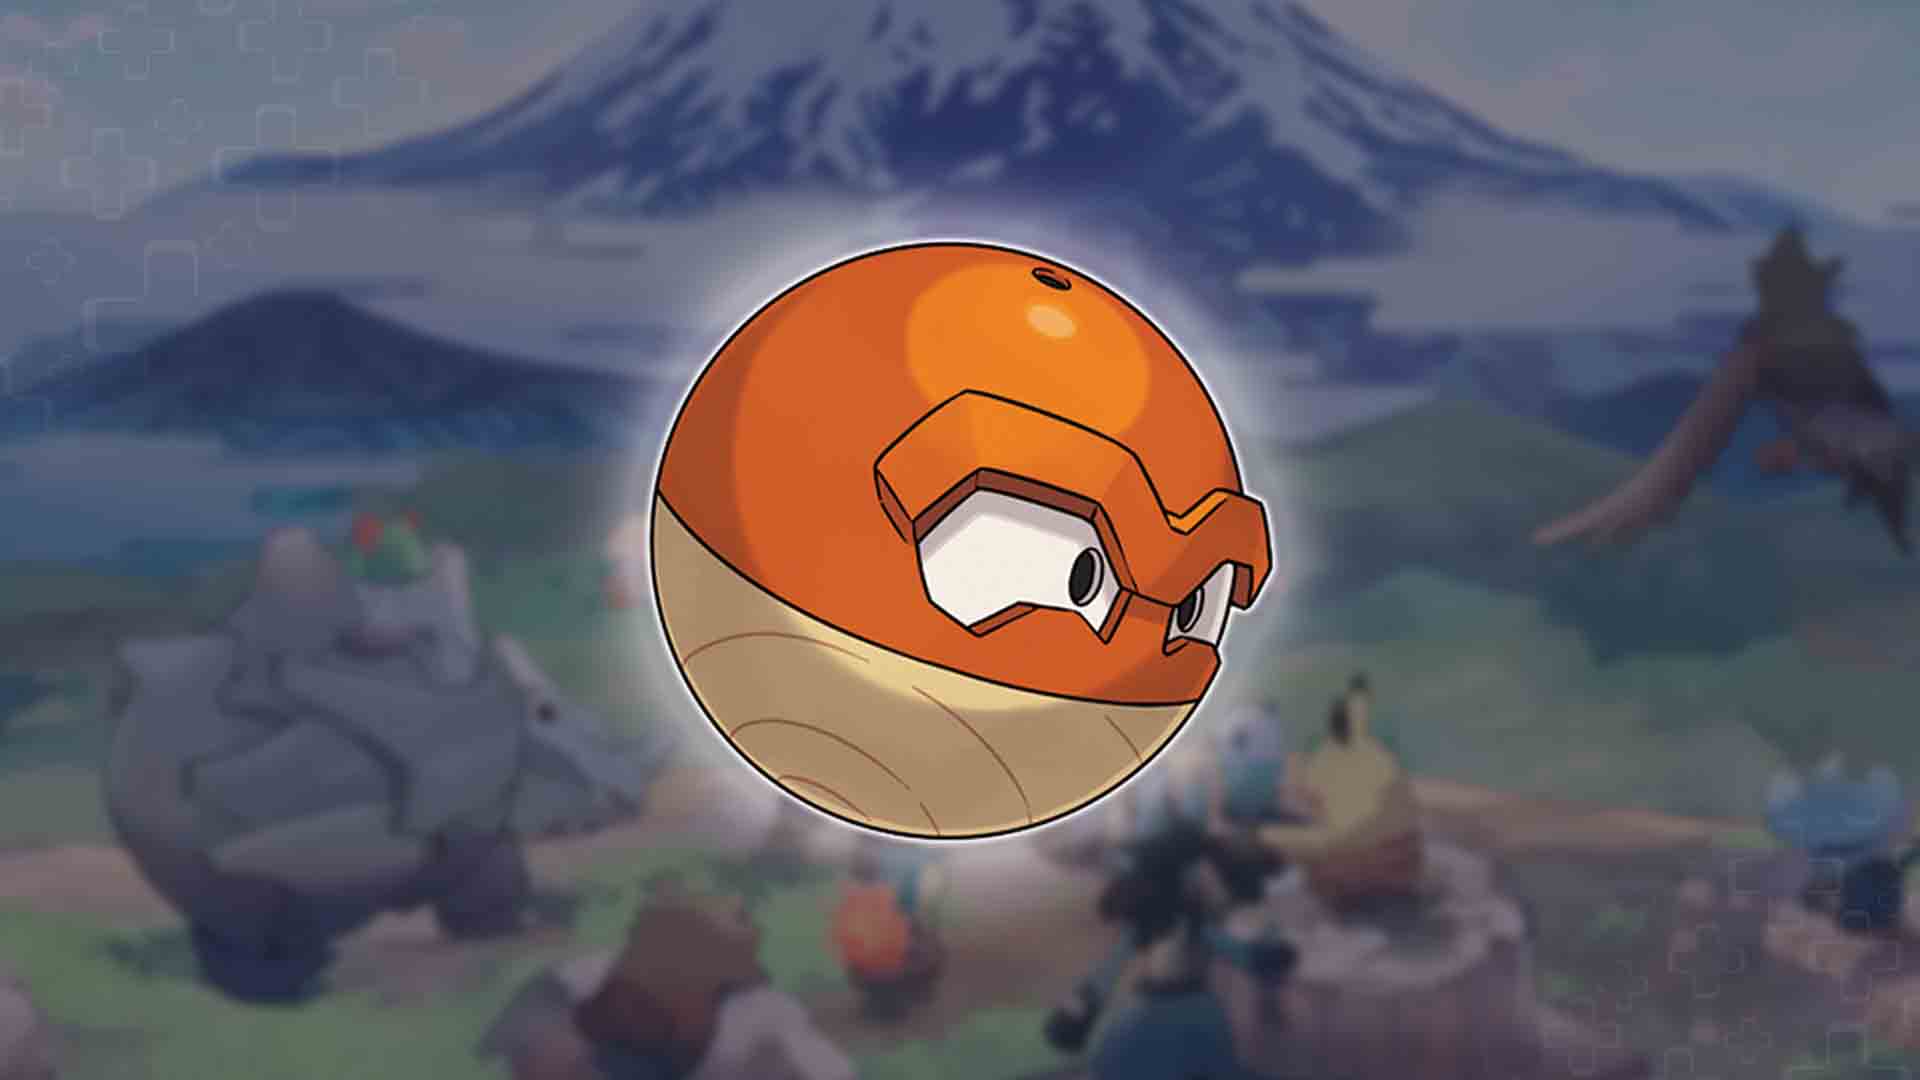 Hisuian Voltorb - Pokemon